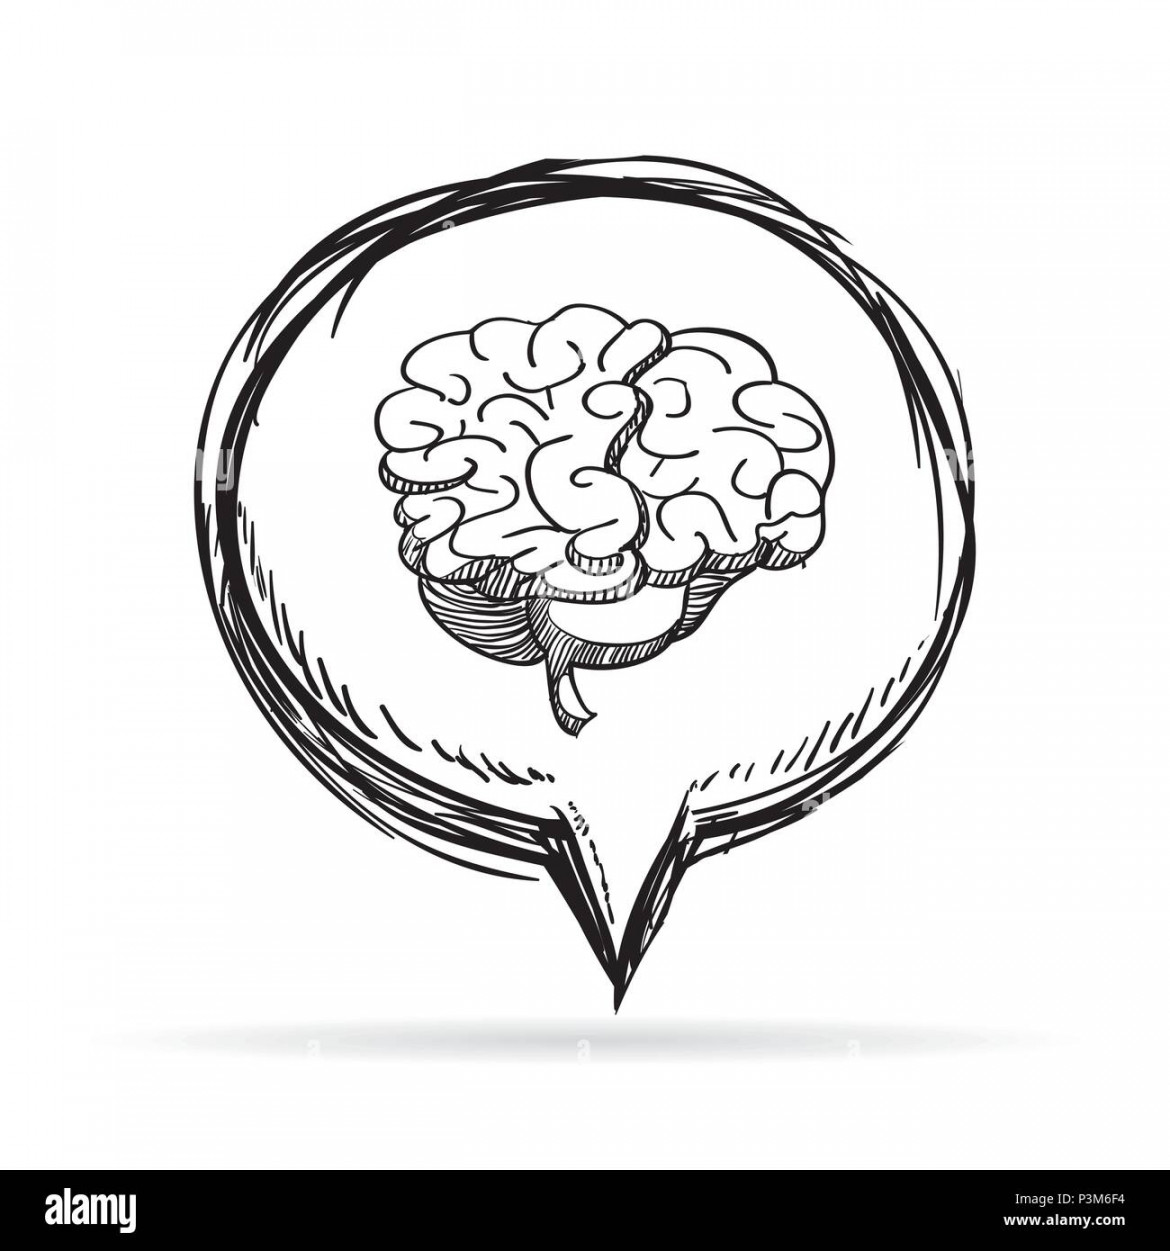 Human brain icon design, vector illustration eps Stock Vector